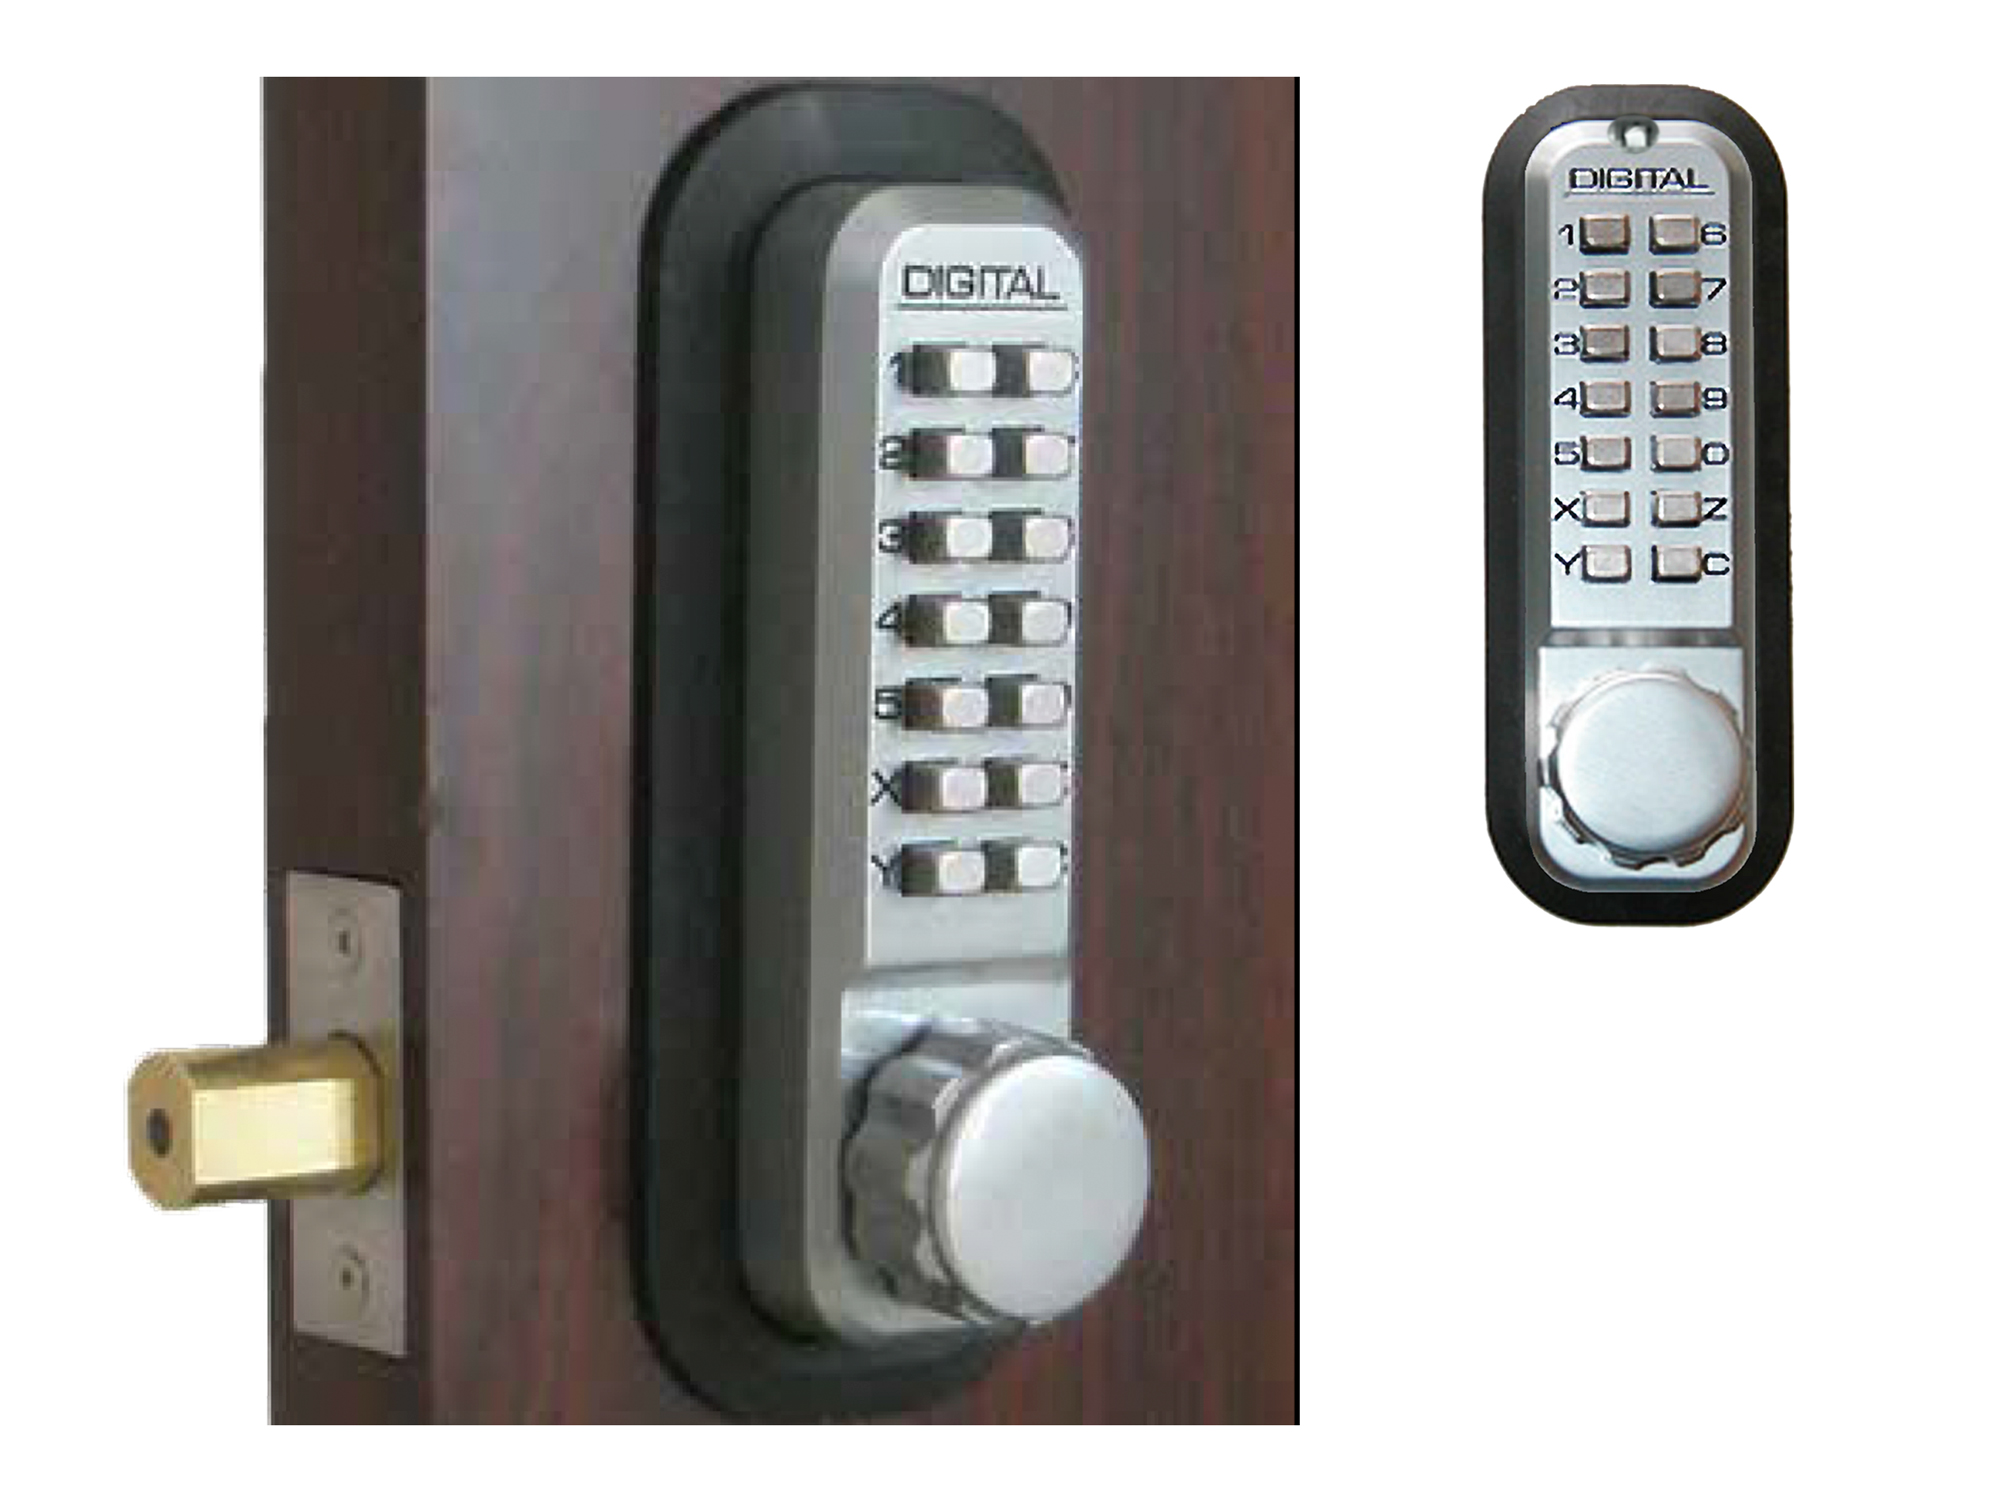 Lockey 2210DC Deadbolt Double-Keypad Lock